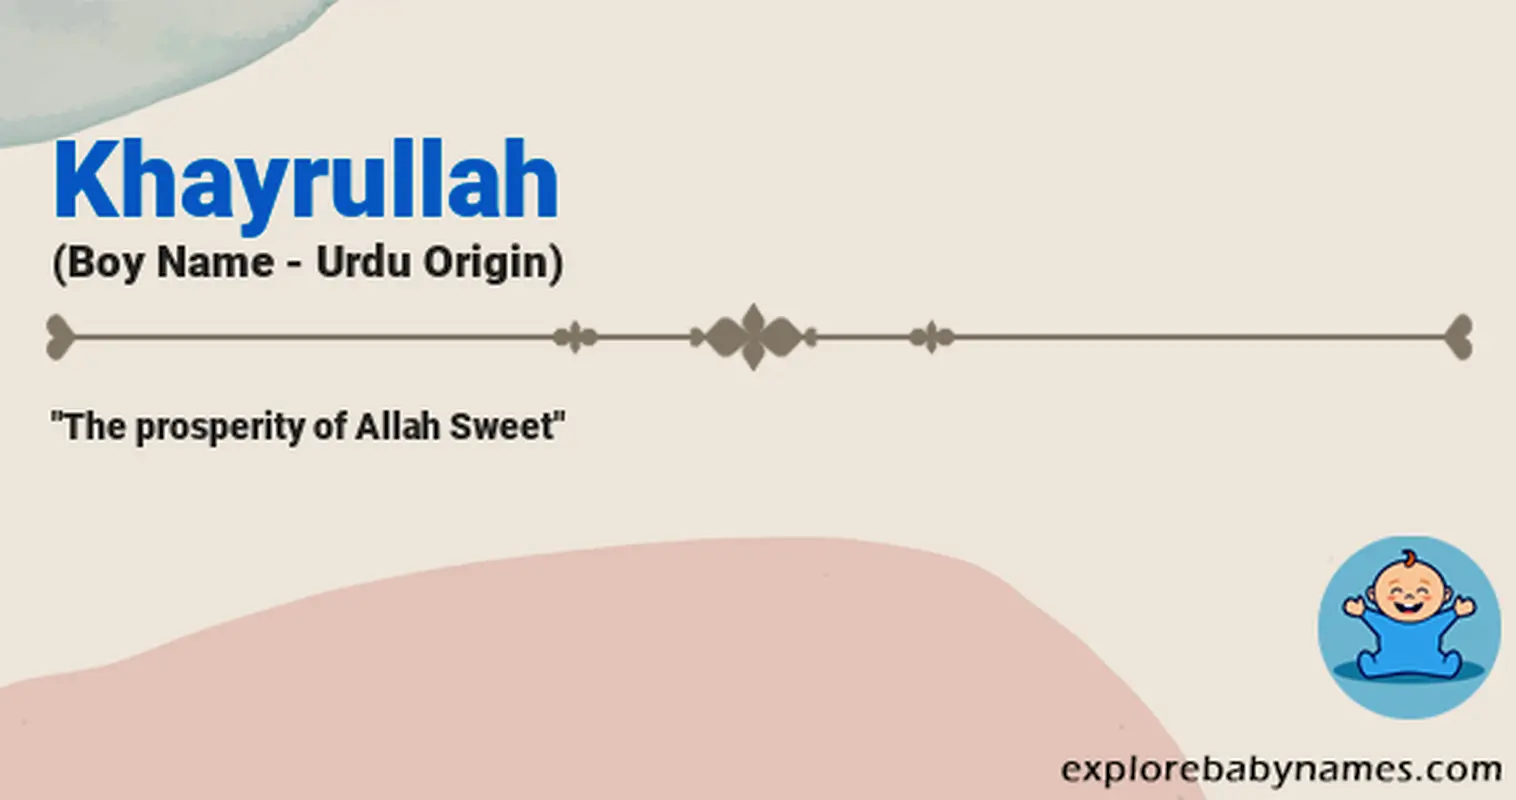 Meaning of Khayrullah